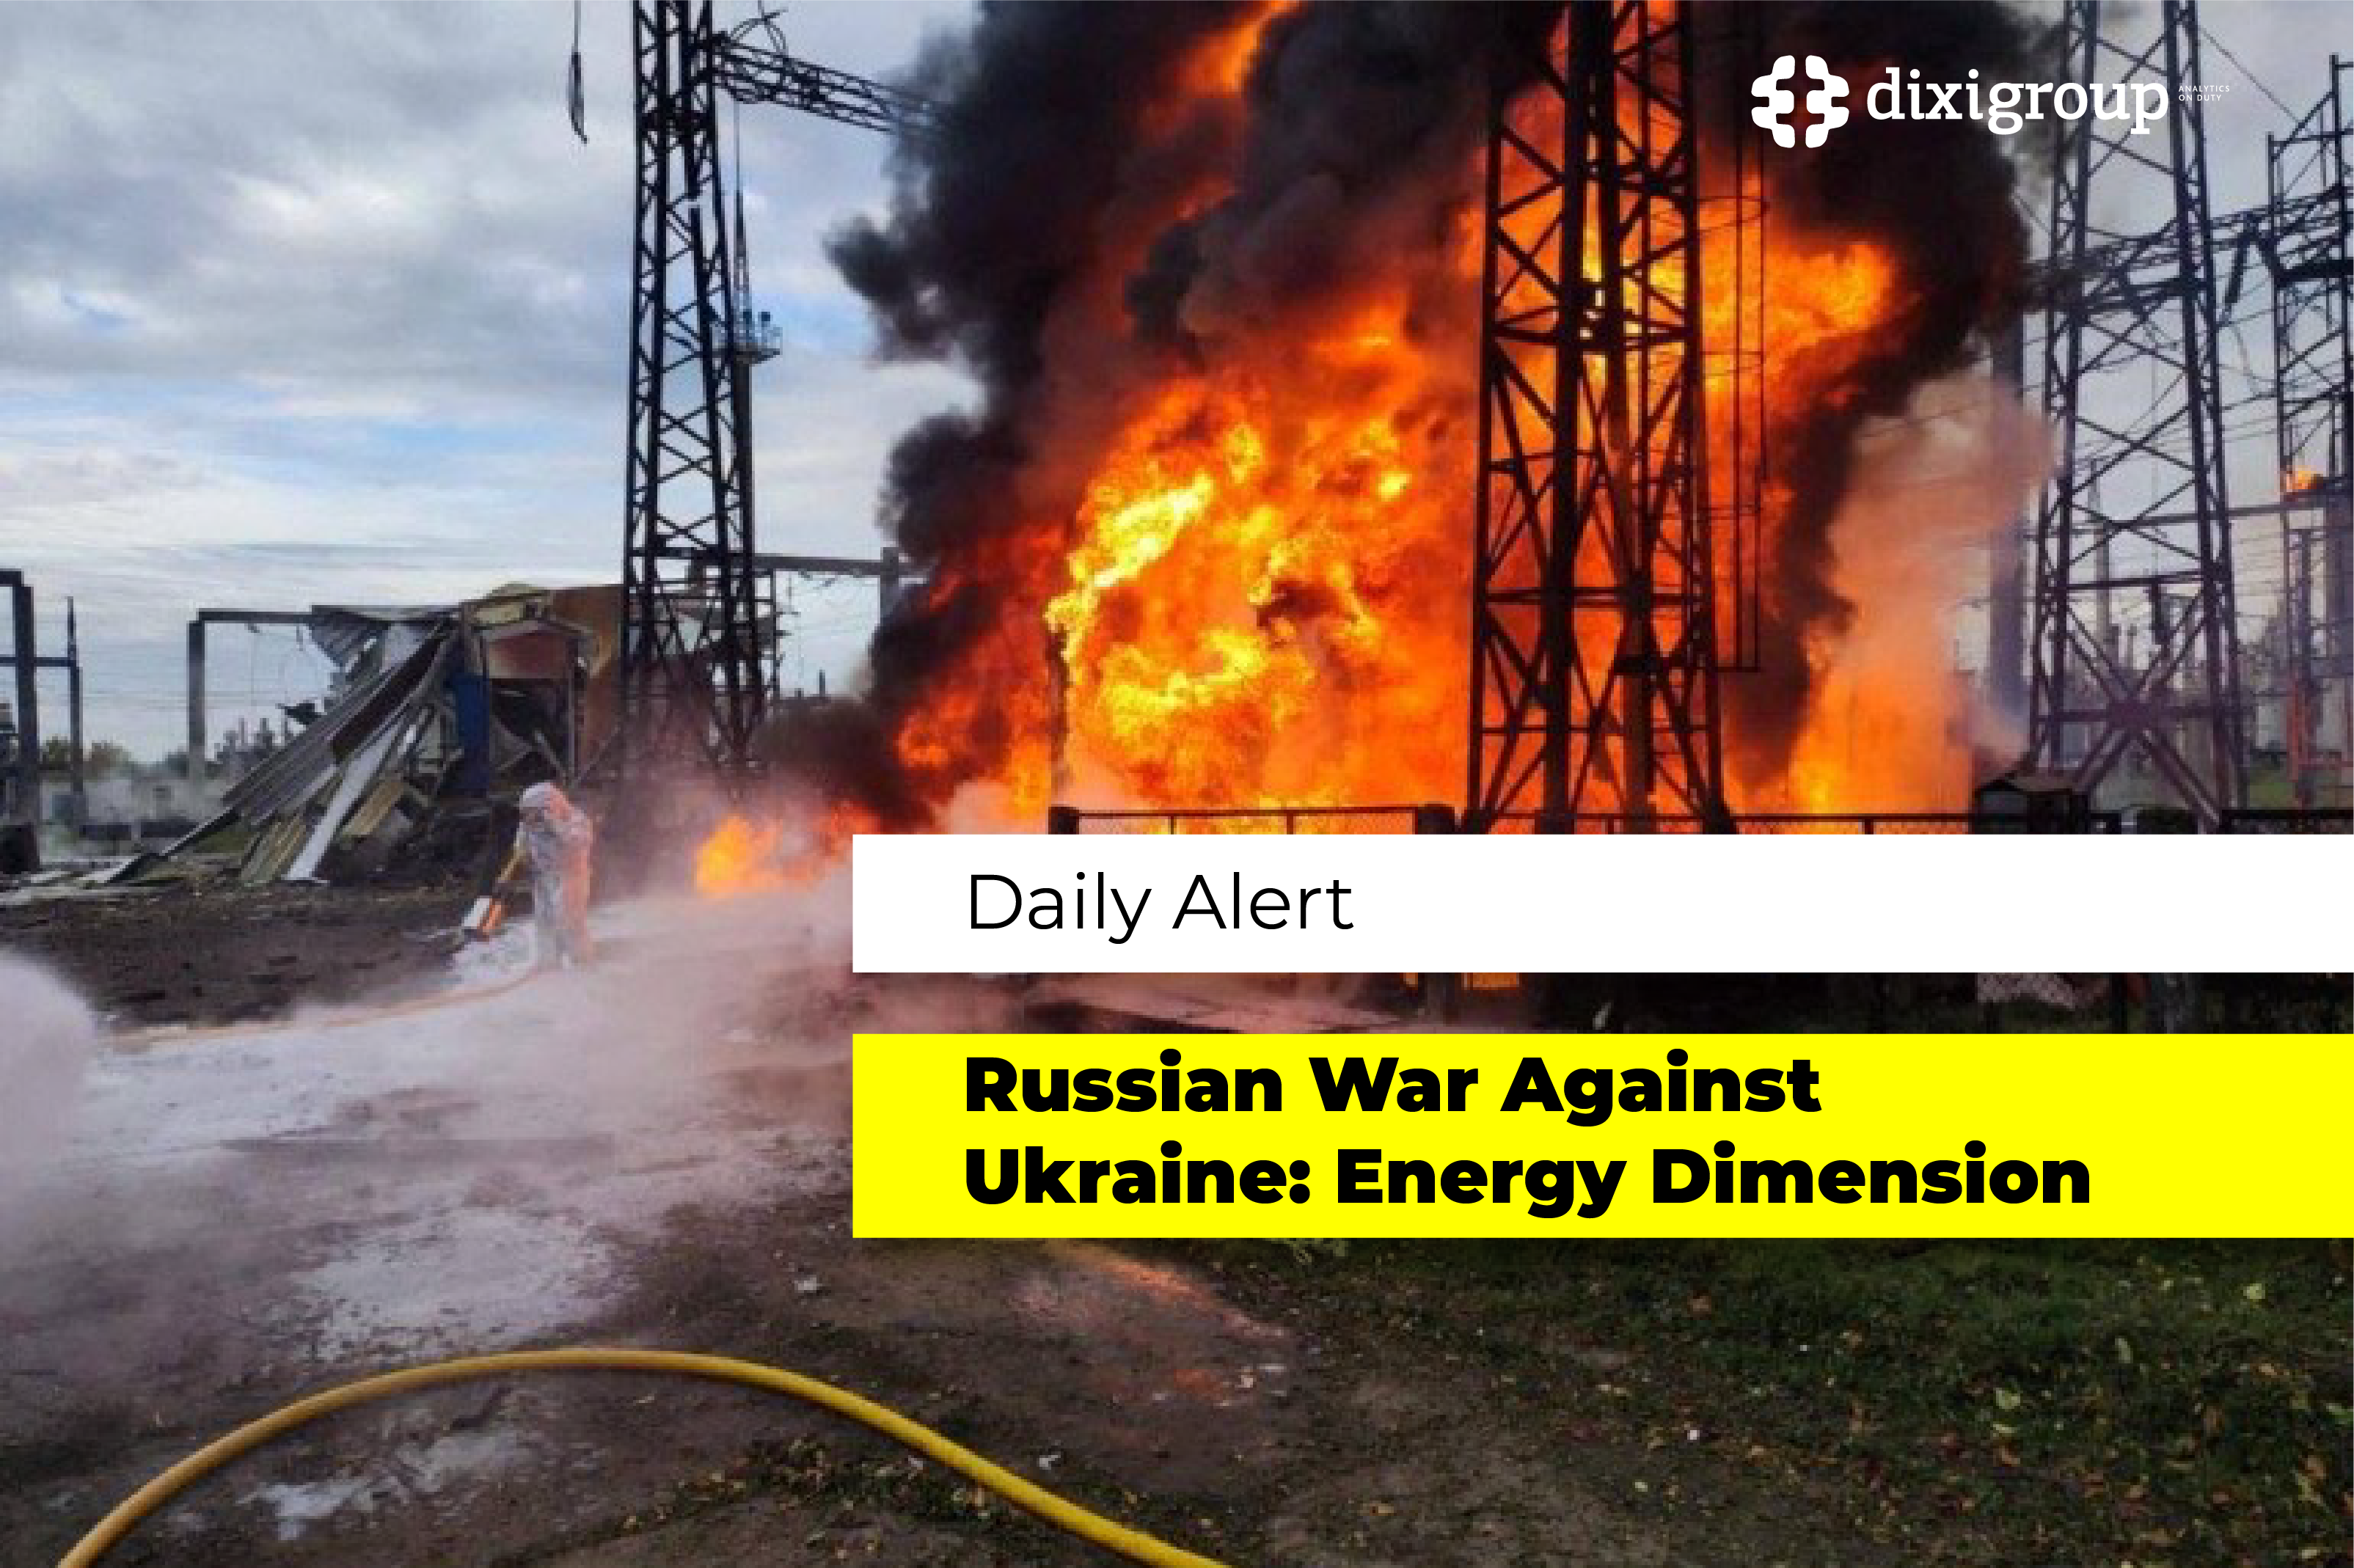 Russian War Against Ukraine: Energy Dimension (weekly updating DiXi Group alert)